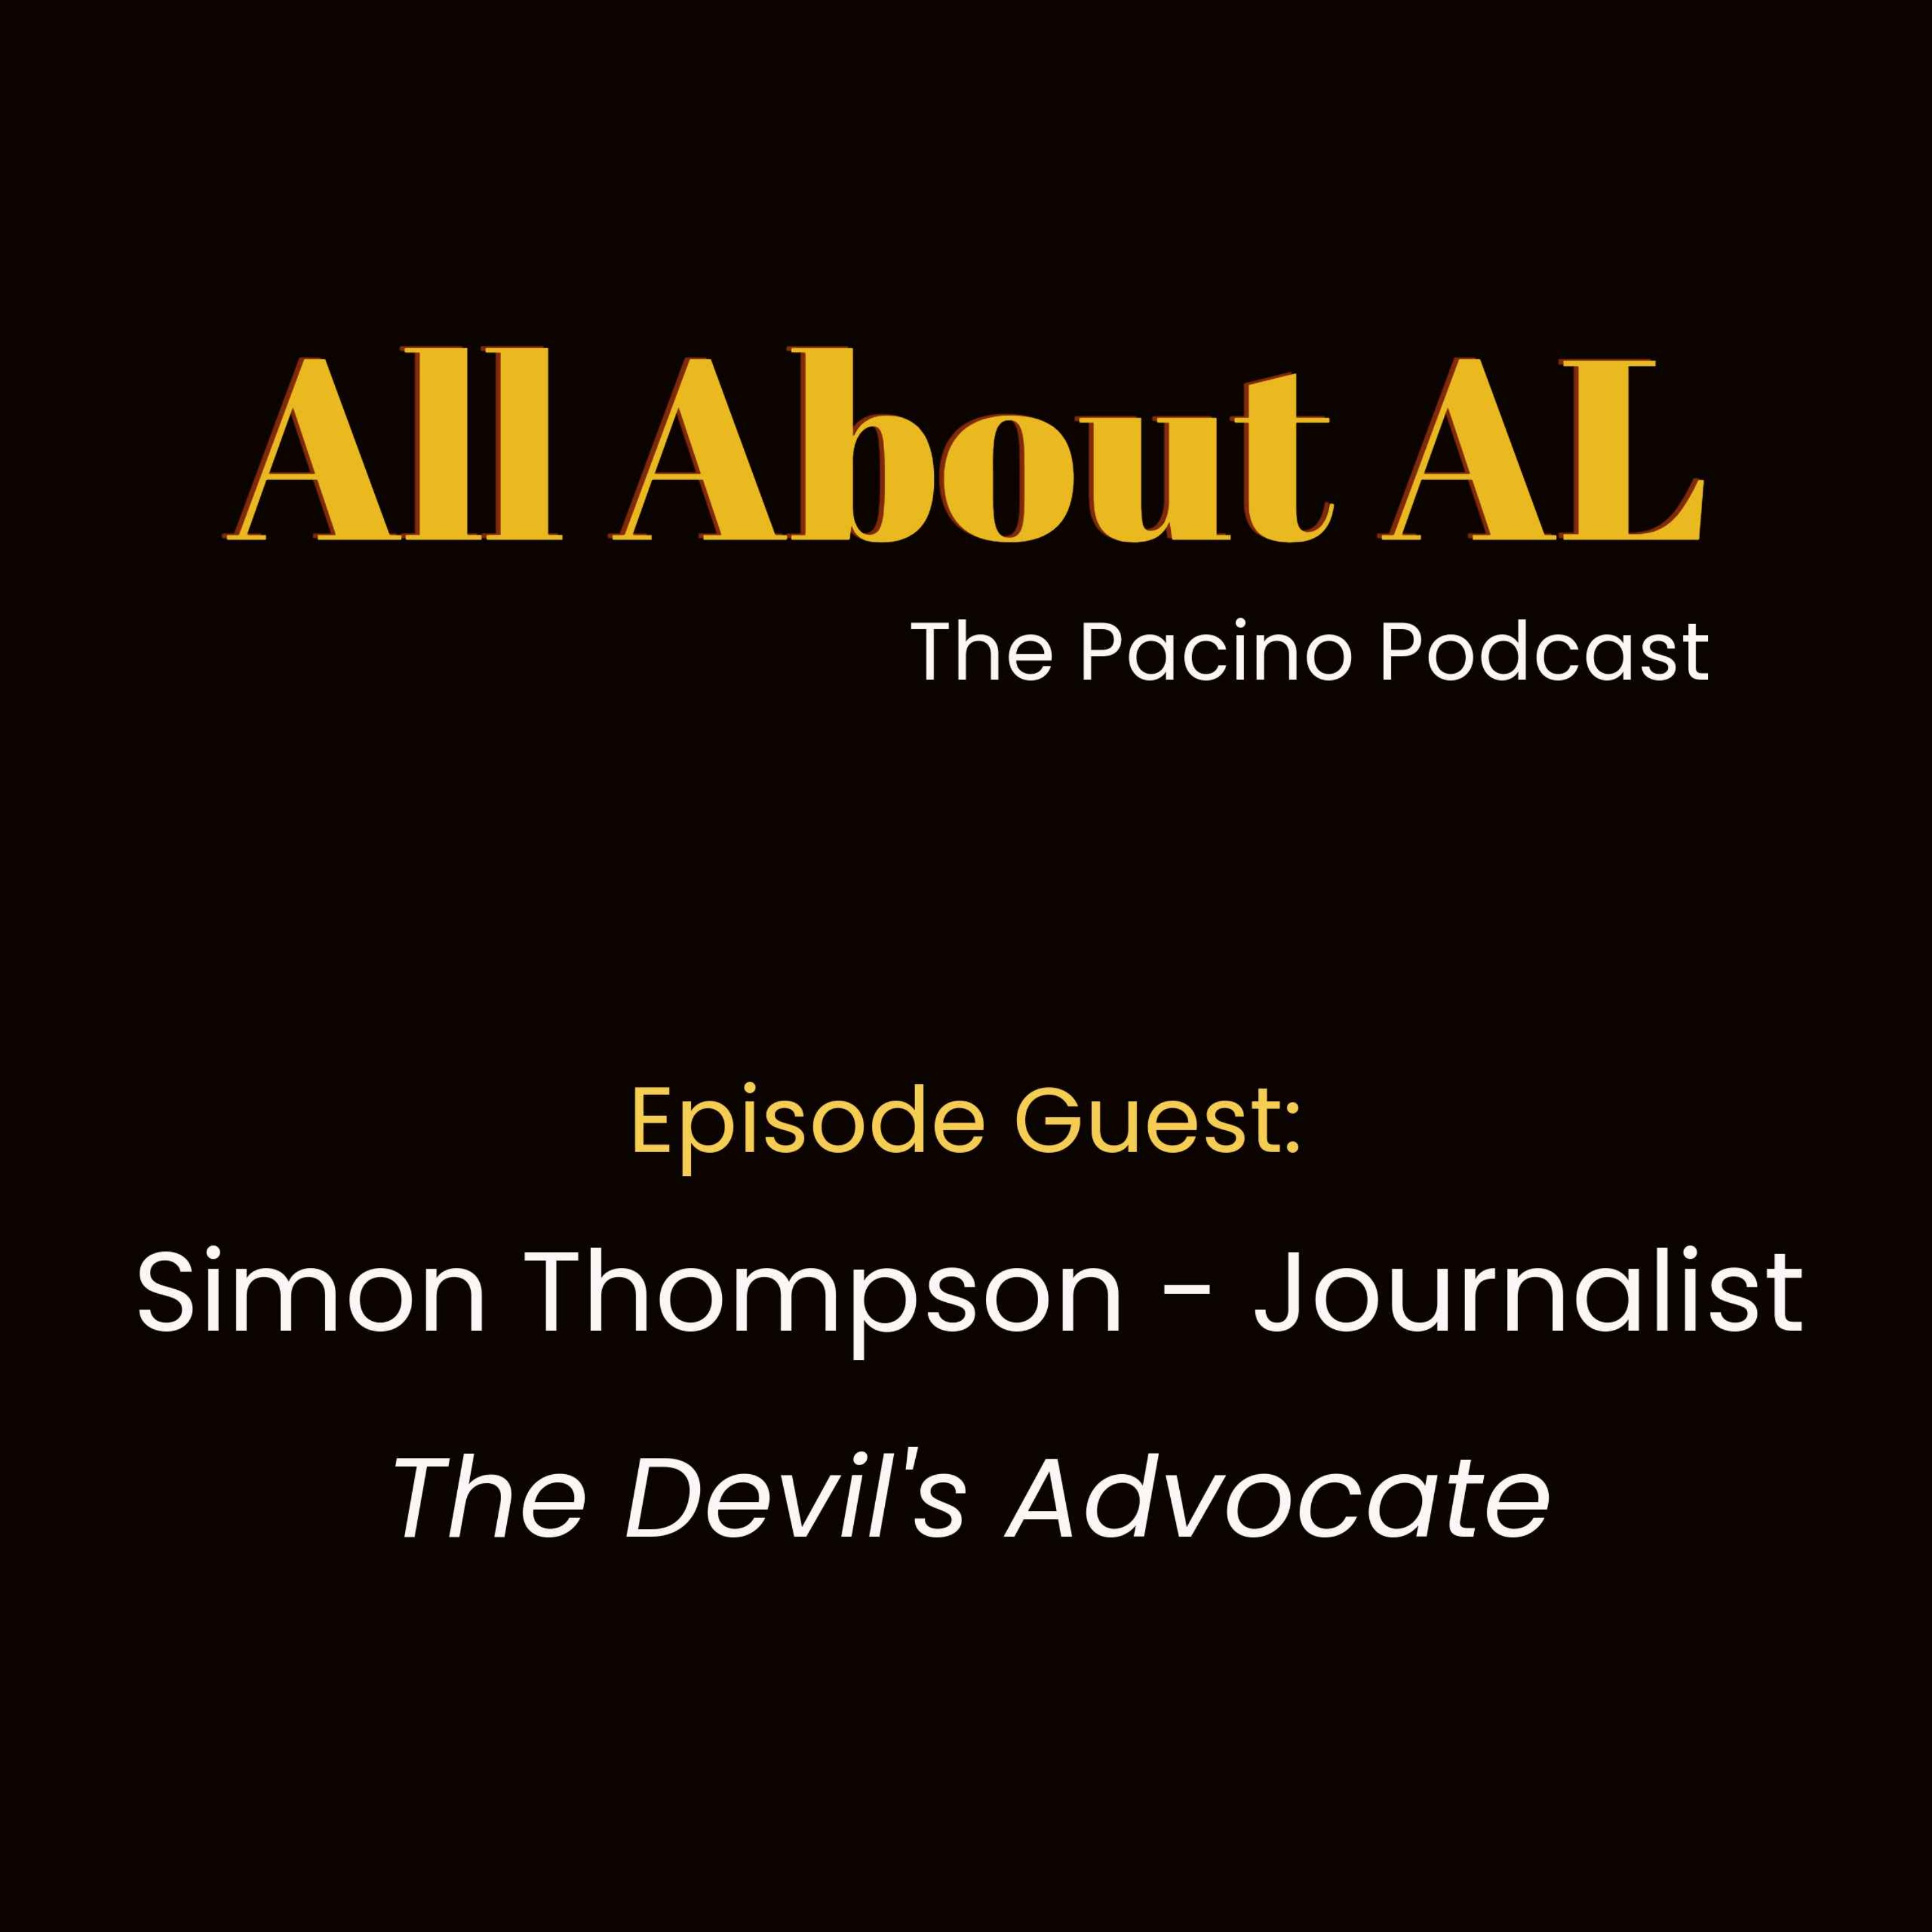 Episode 18: The Devil's Advocate with Simon Thompson